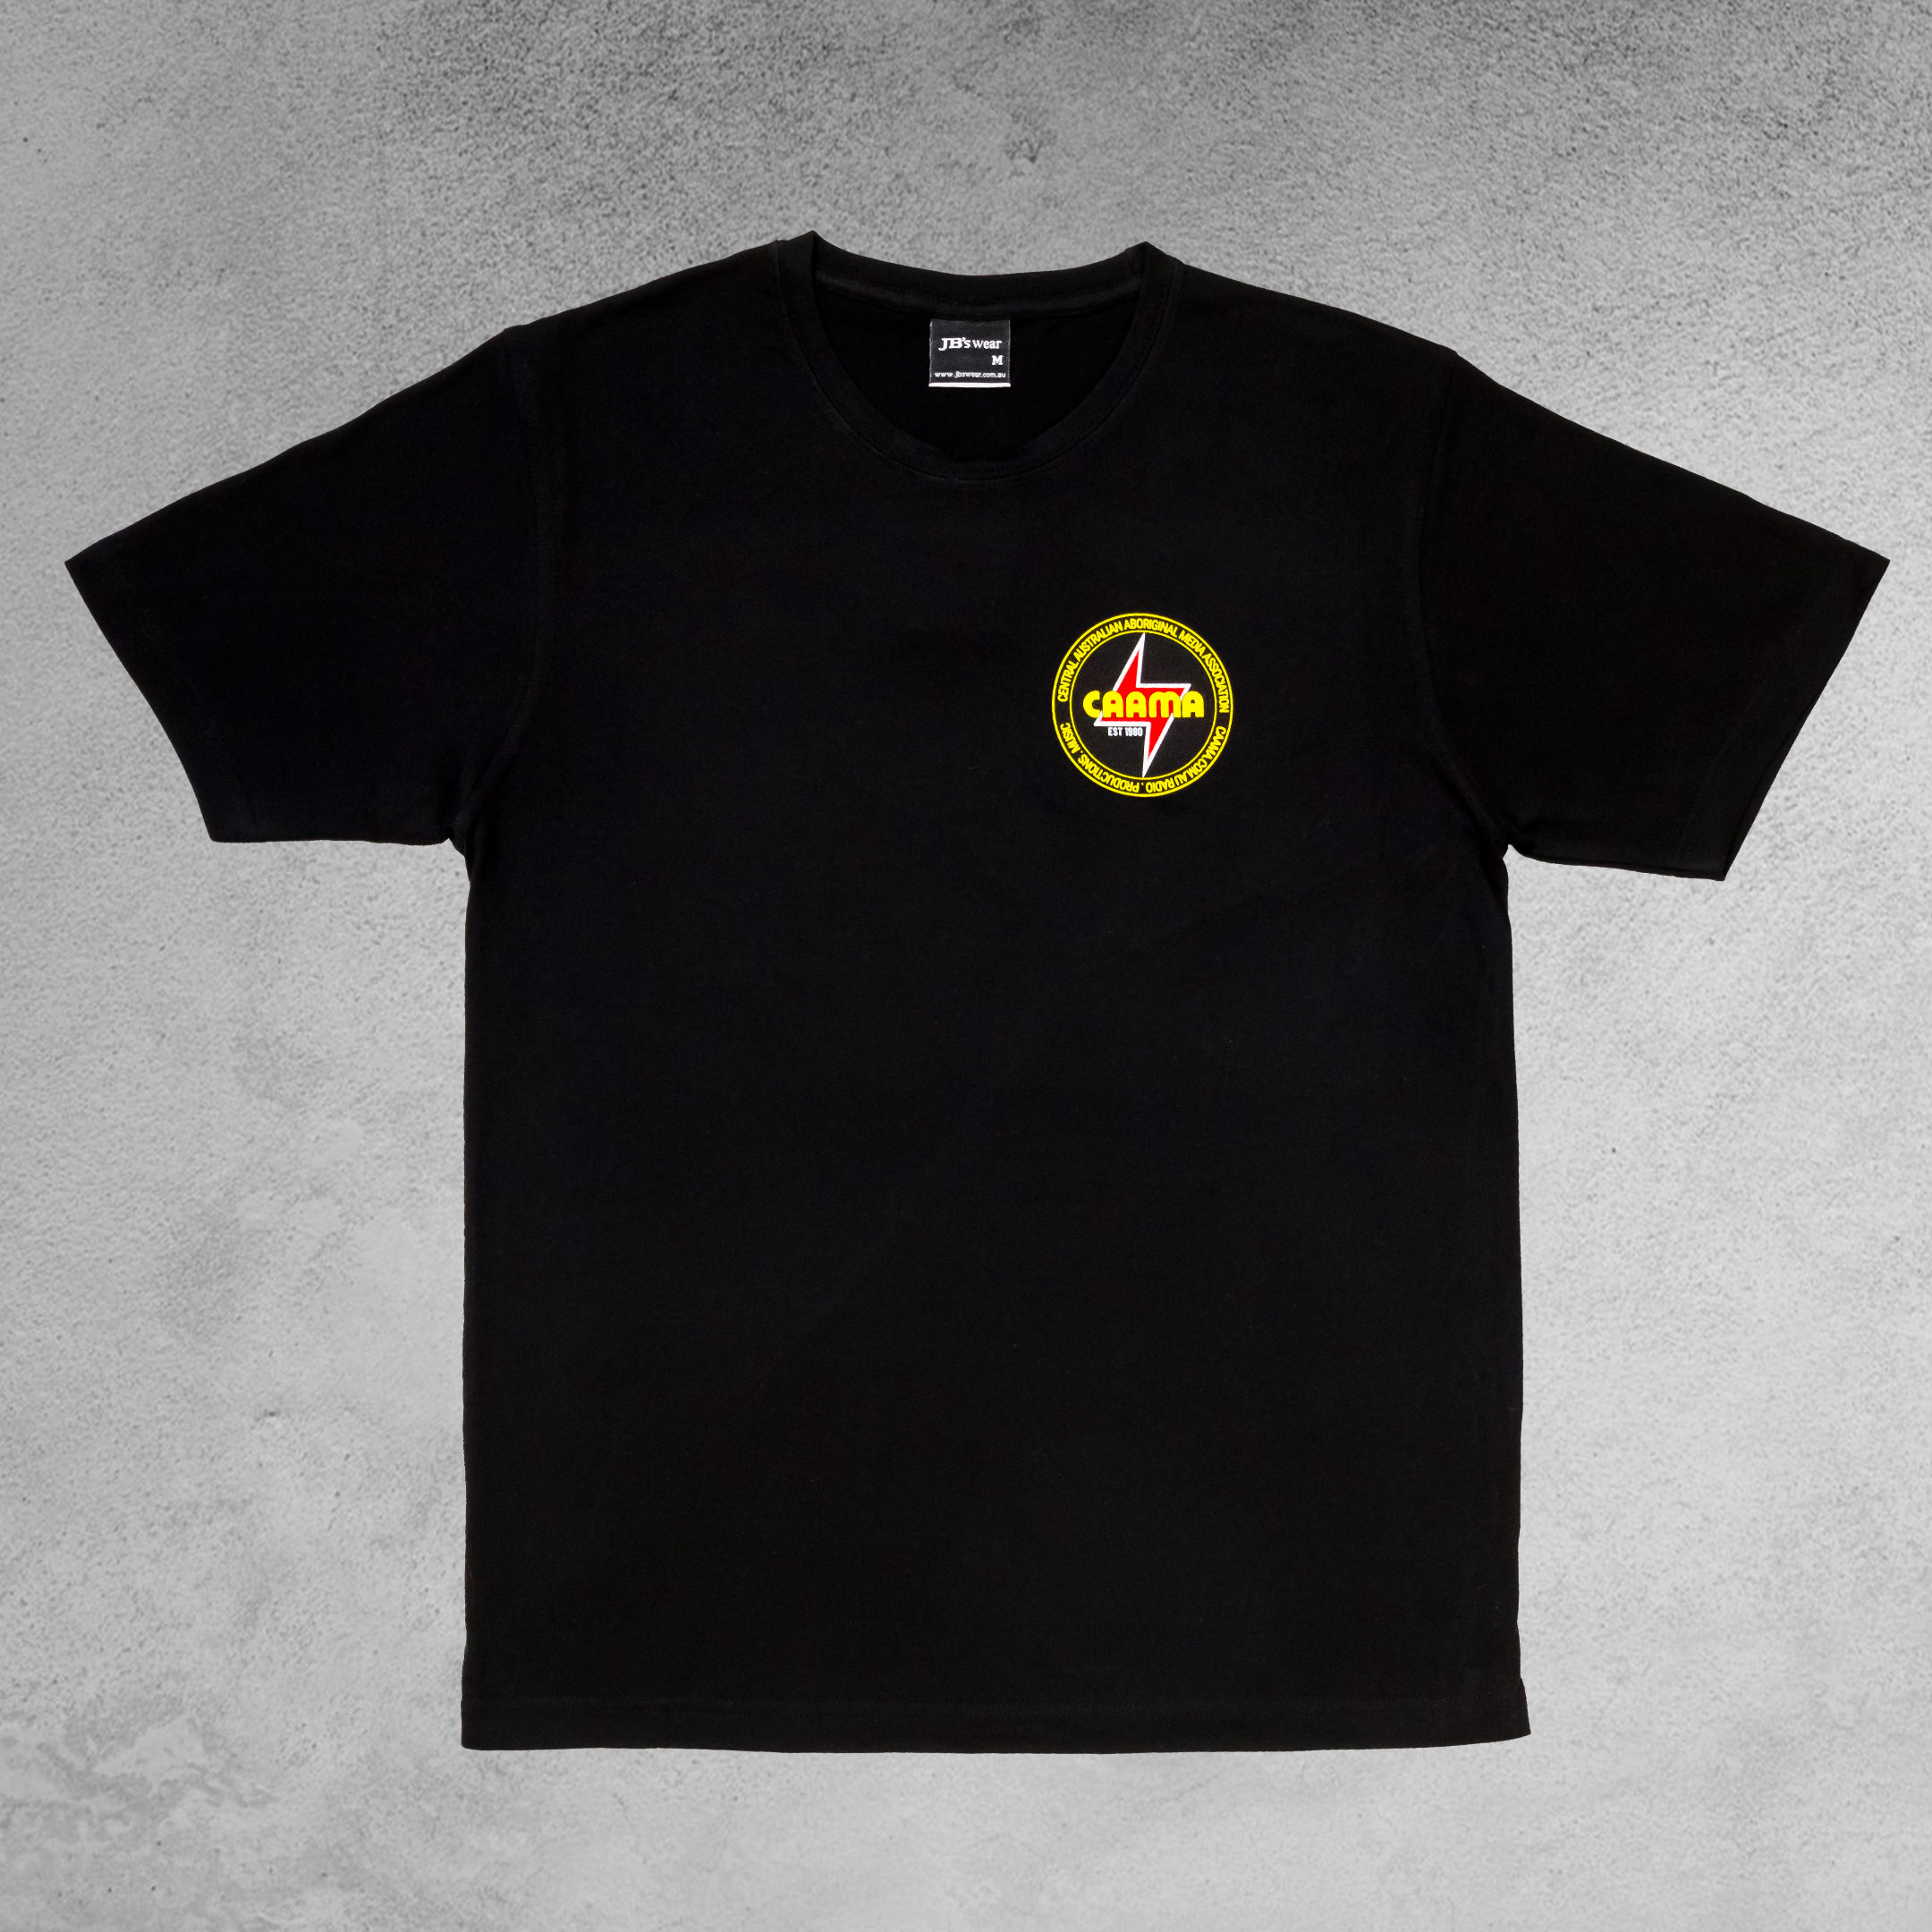 CAAMA Music Retro Logo T-Shirt - Black